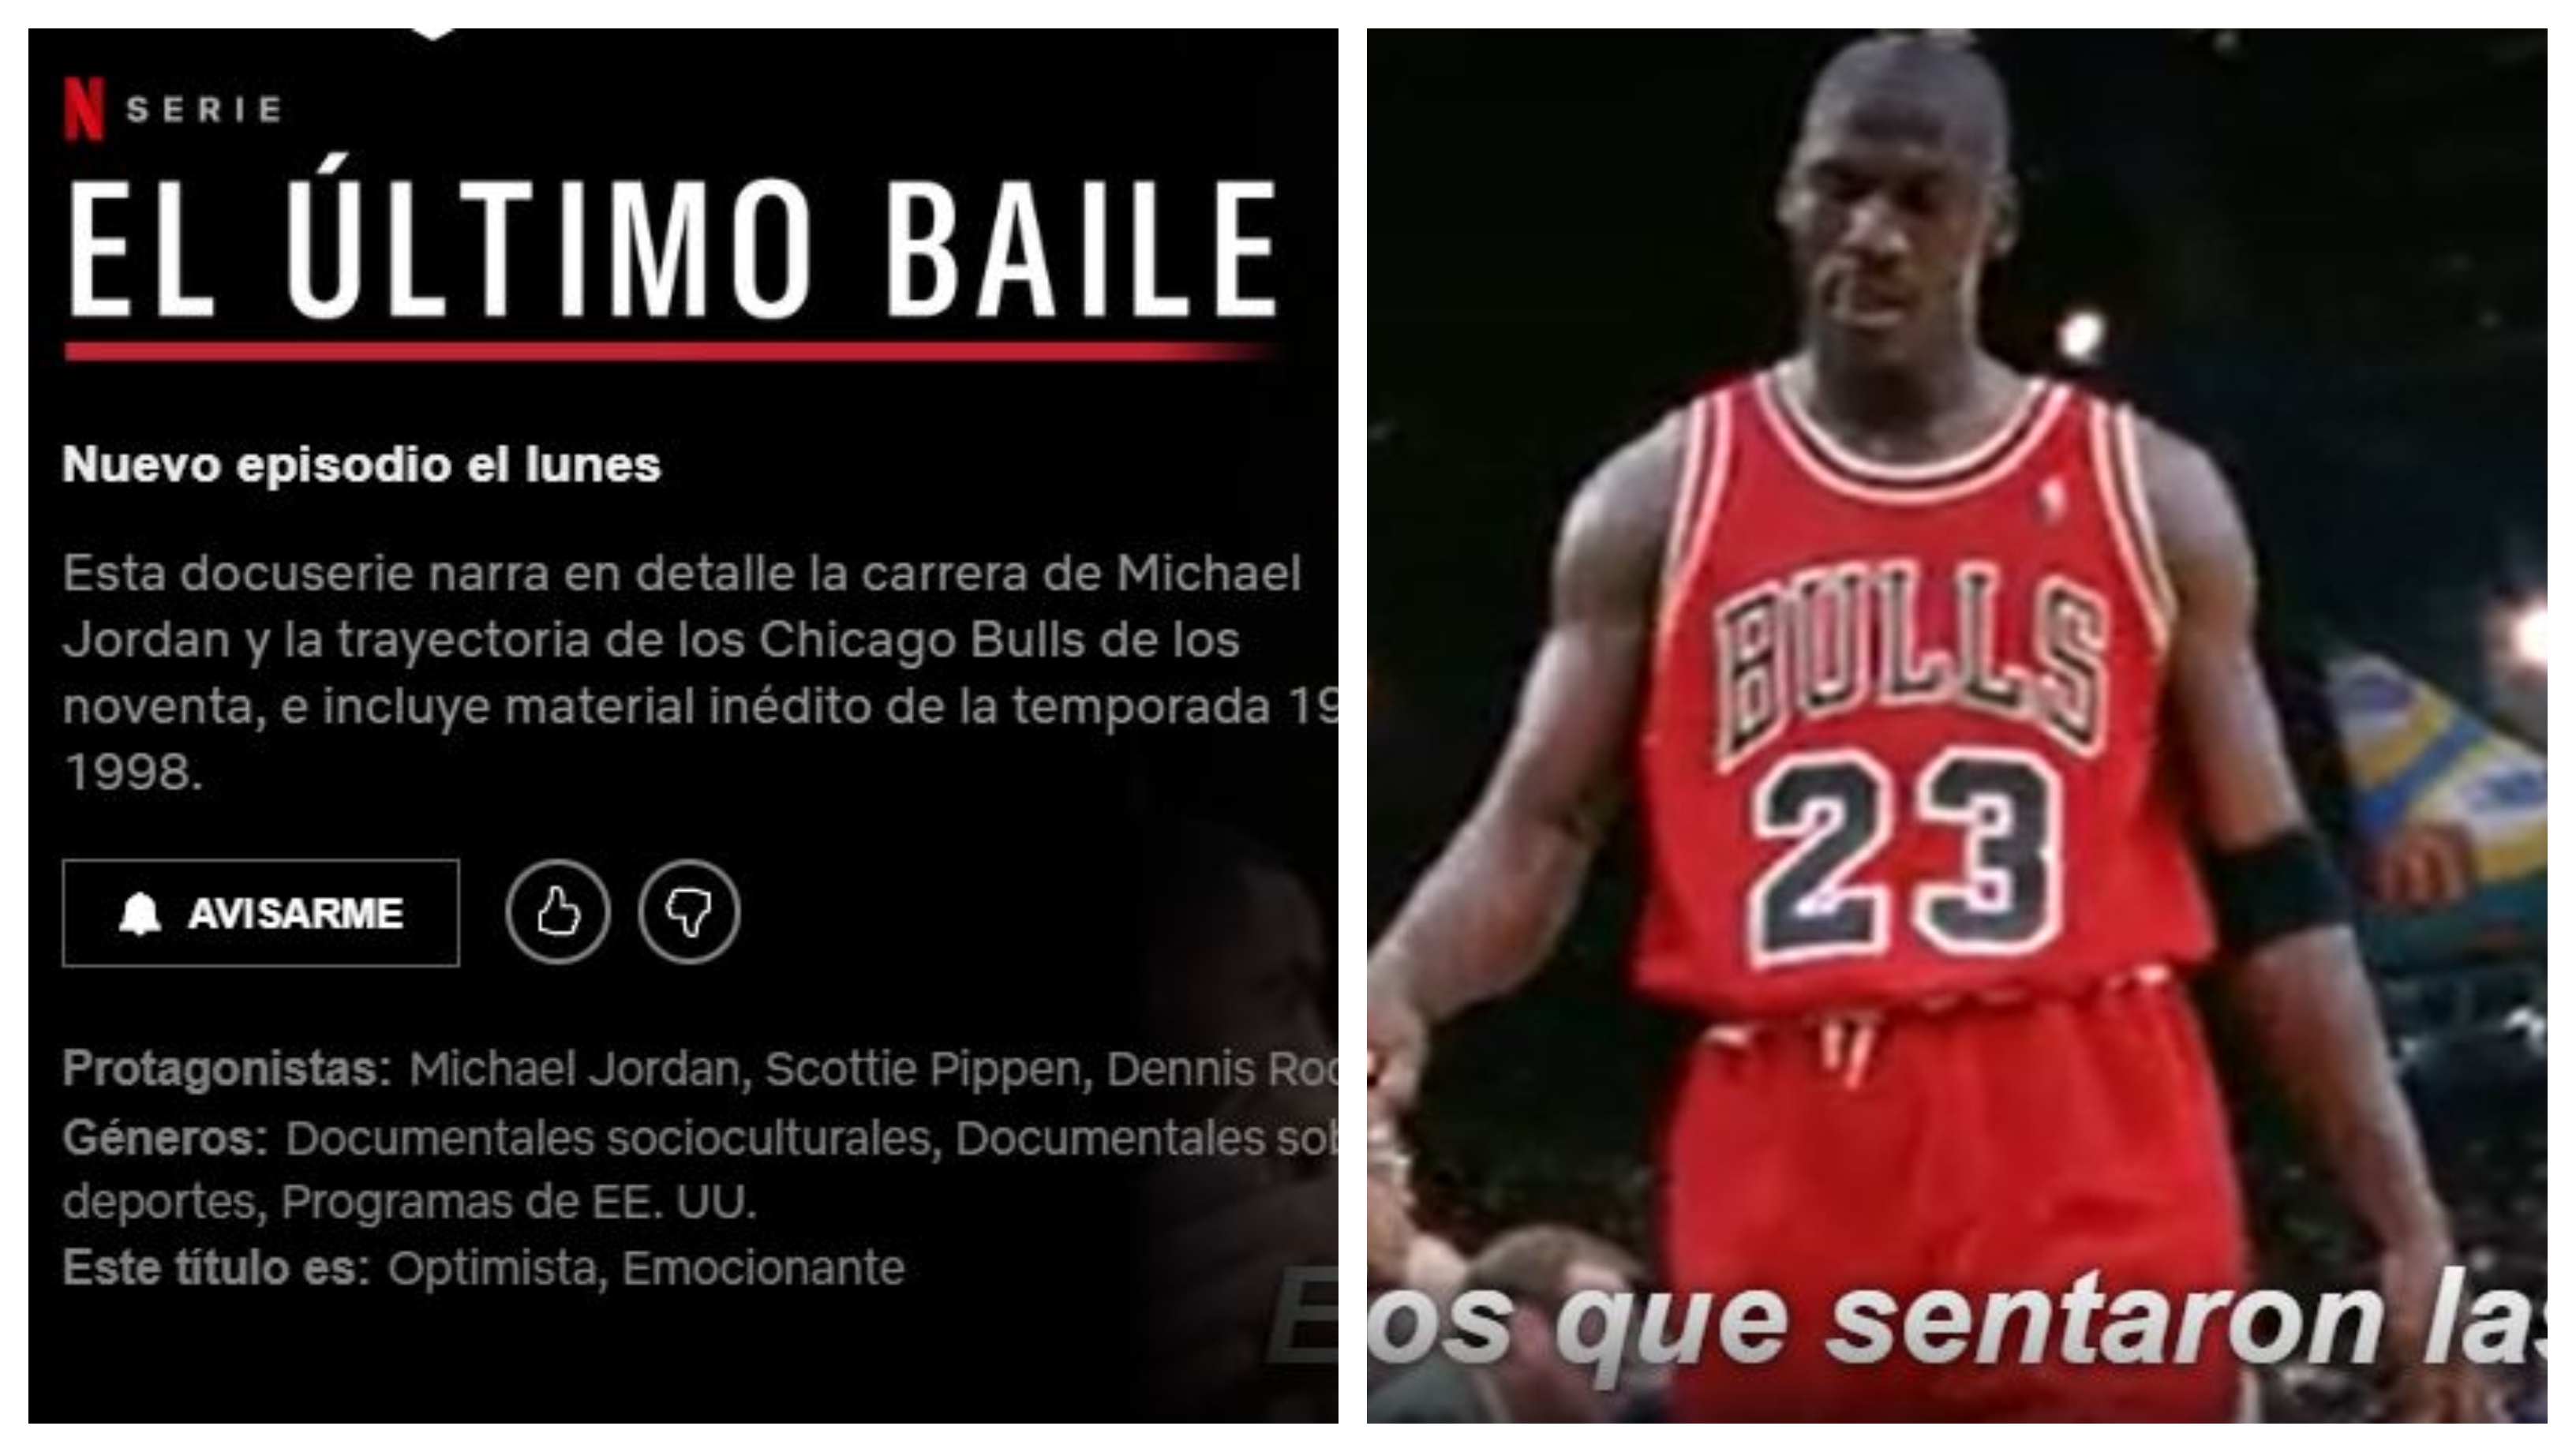 La serie sobre Michael Jordan y los Chicago Bulls estará disponible en Netflix. (Foto Prensa Libre: Netflix)